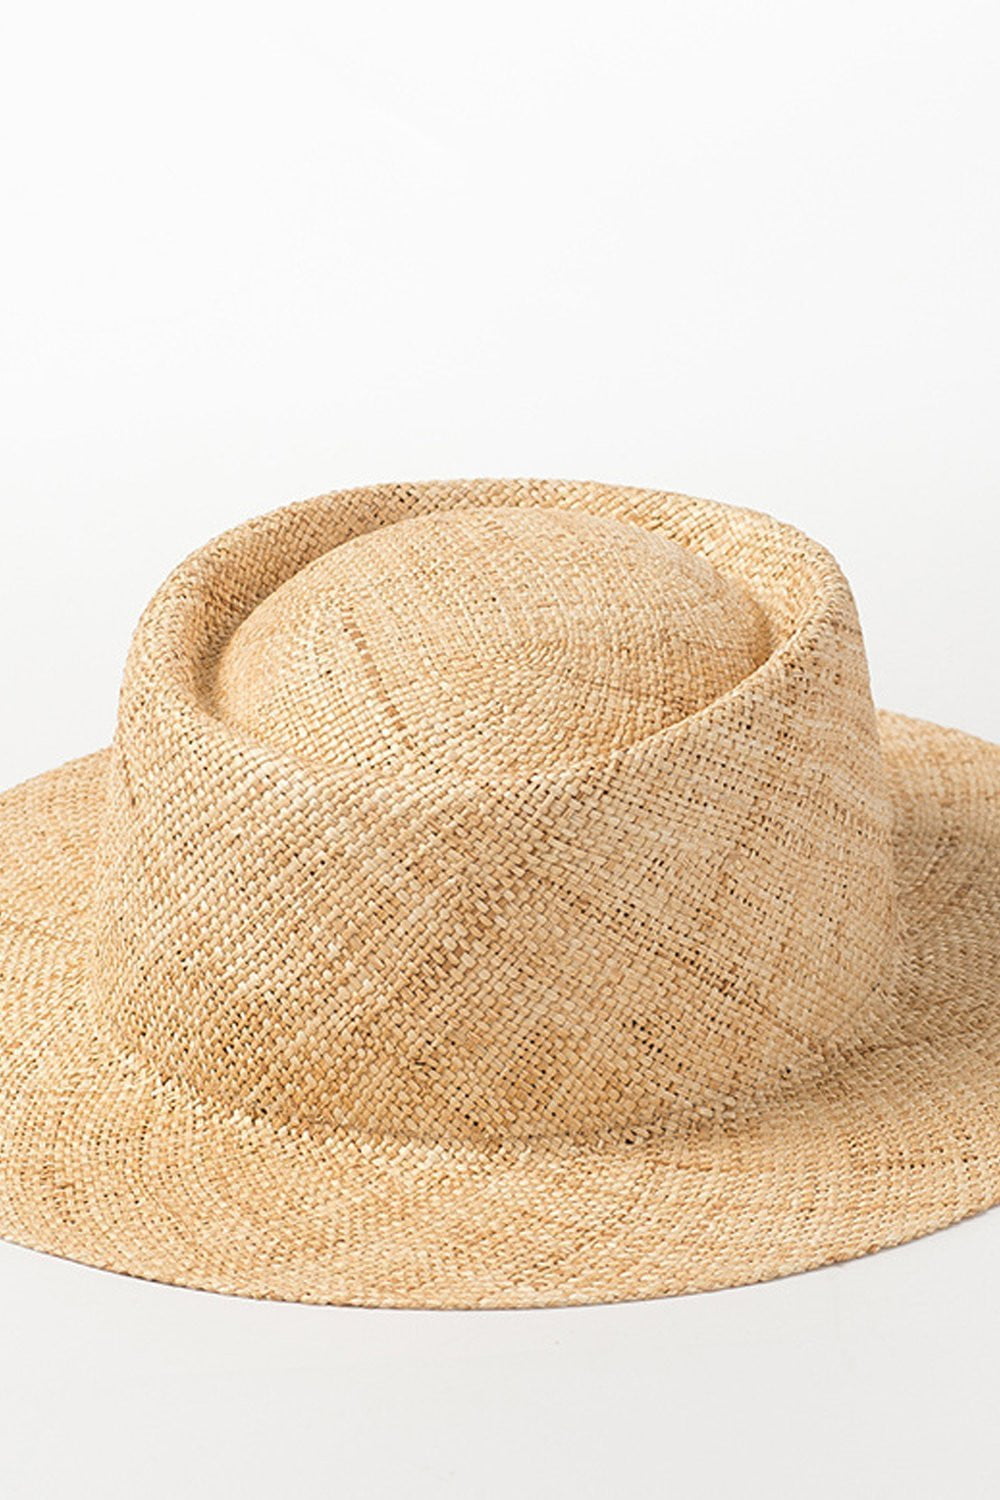 Bao Straw Boster Hat (2207889981499)